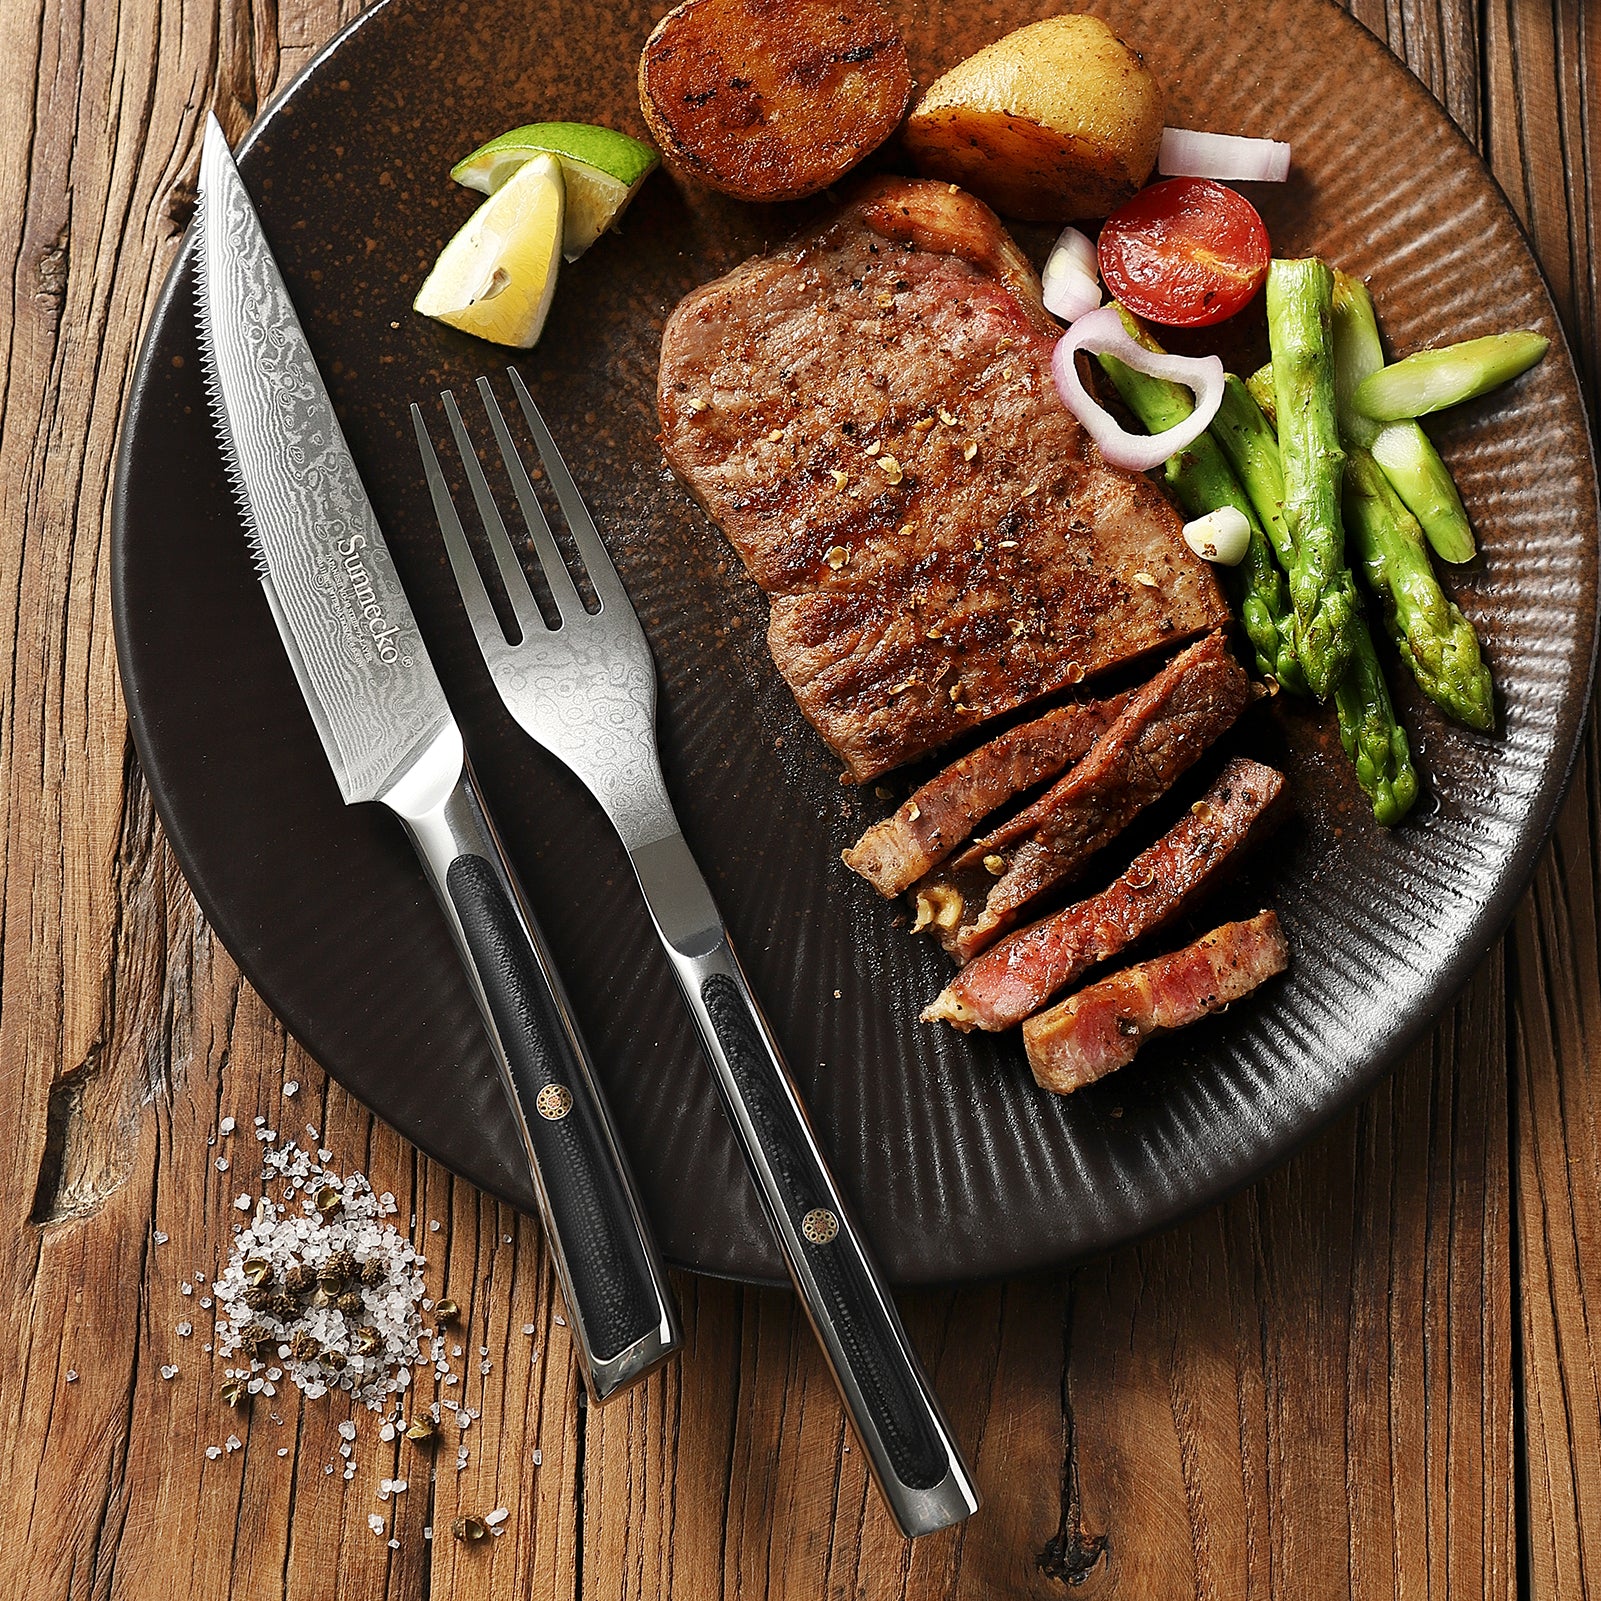 KEEMAKE Damascus 2pcs steak knives & 2pcs forks set with wooden box